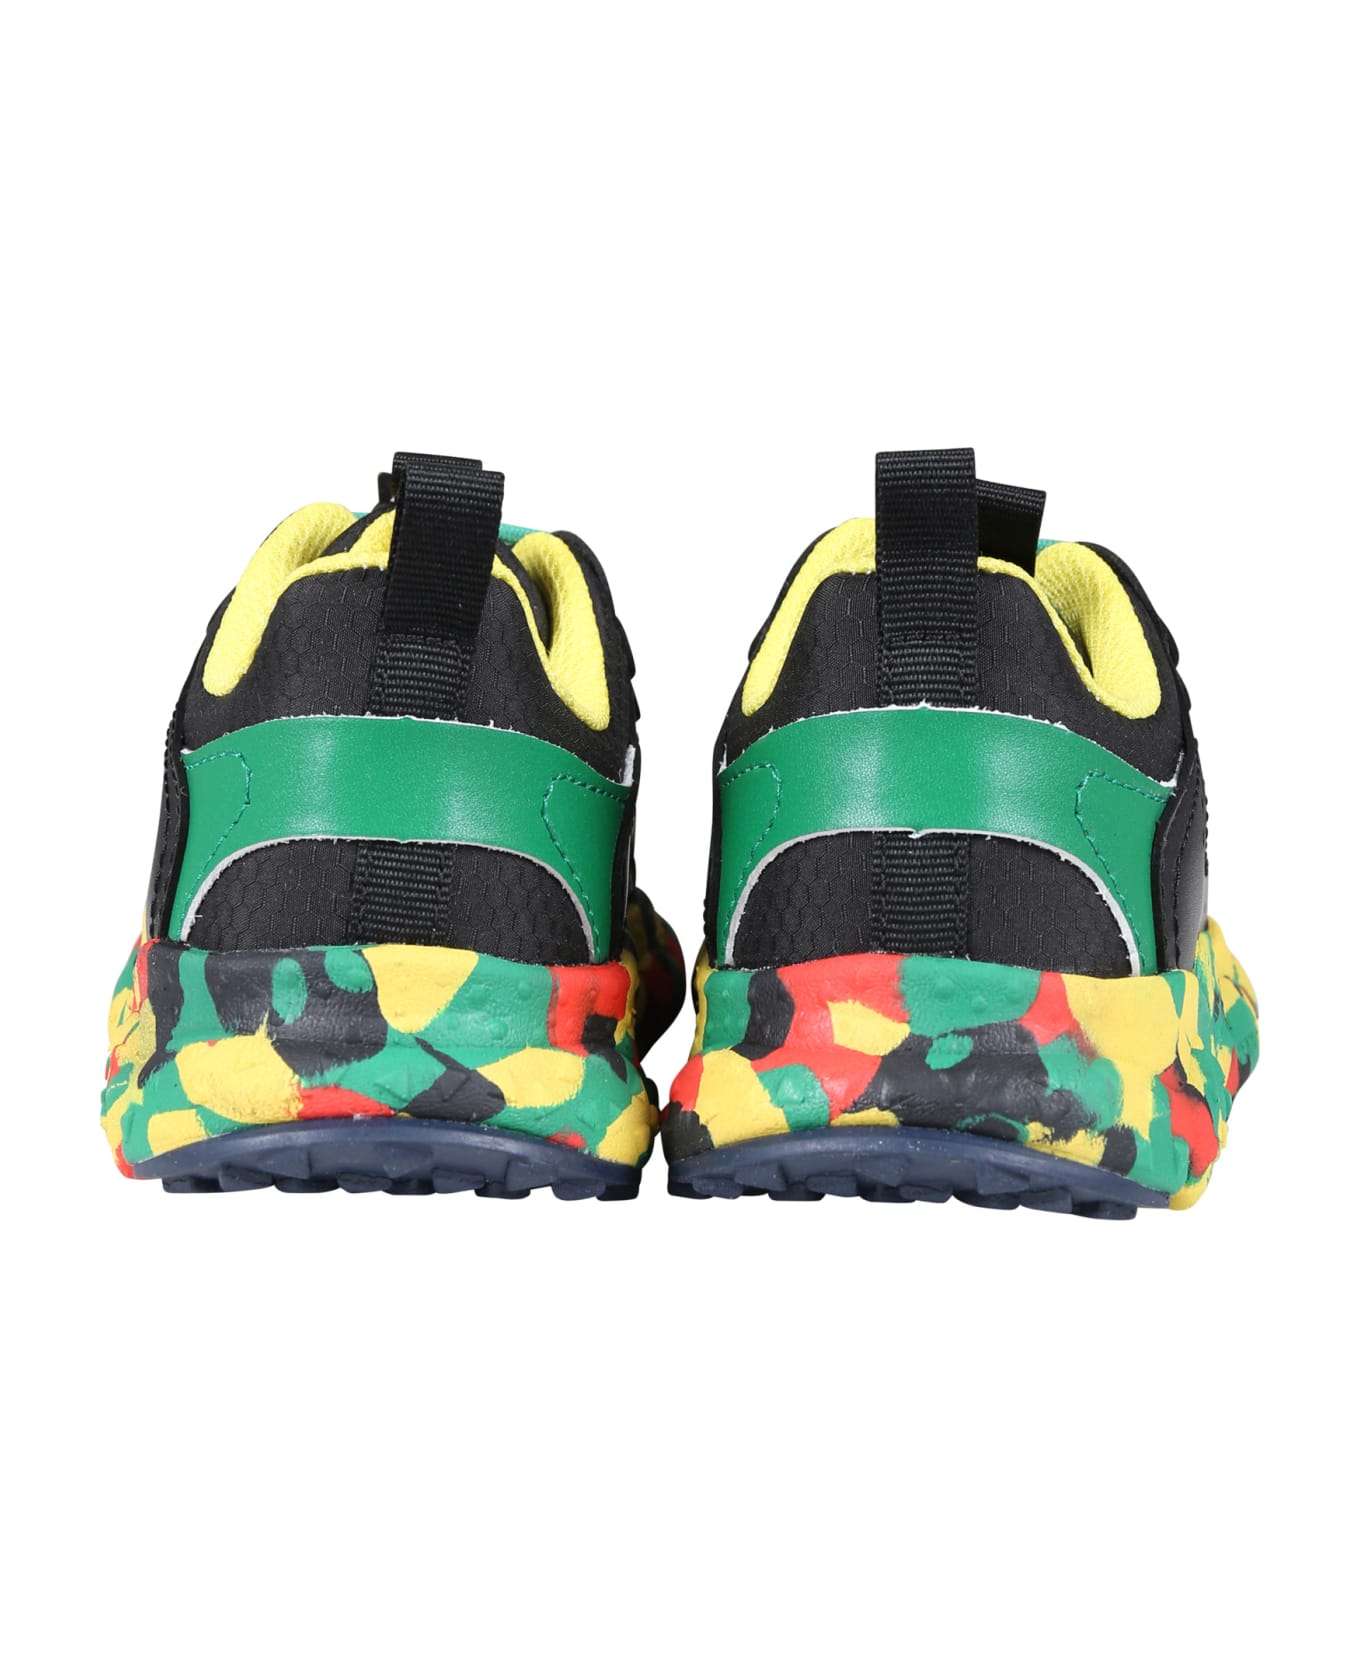 Flower Mountain Black Low Doi Sneakers For Boy - Black